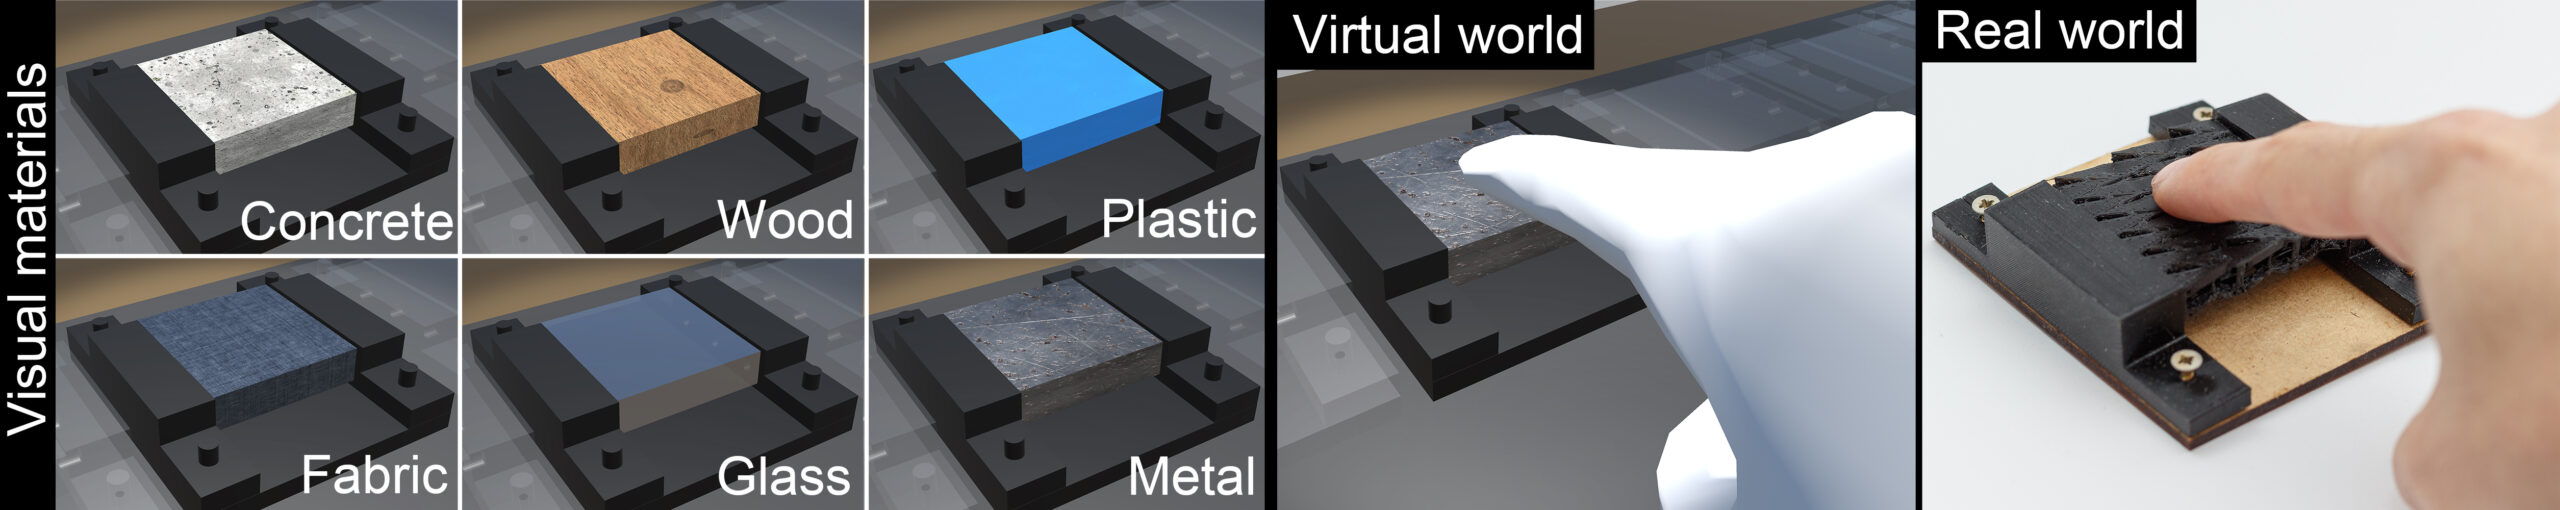 explore metamaterial textures in virtual reality